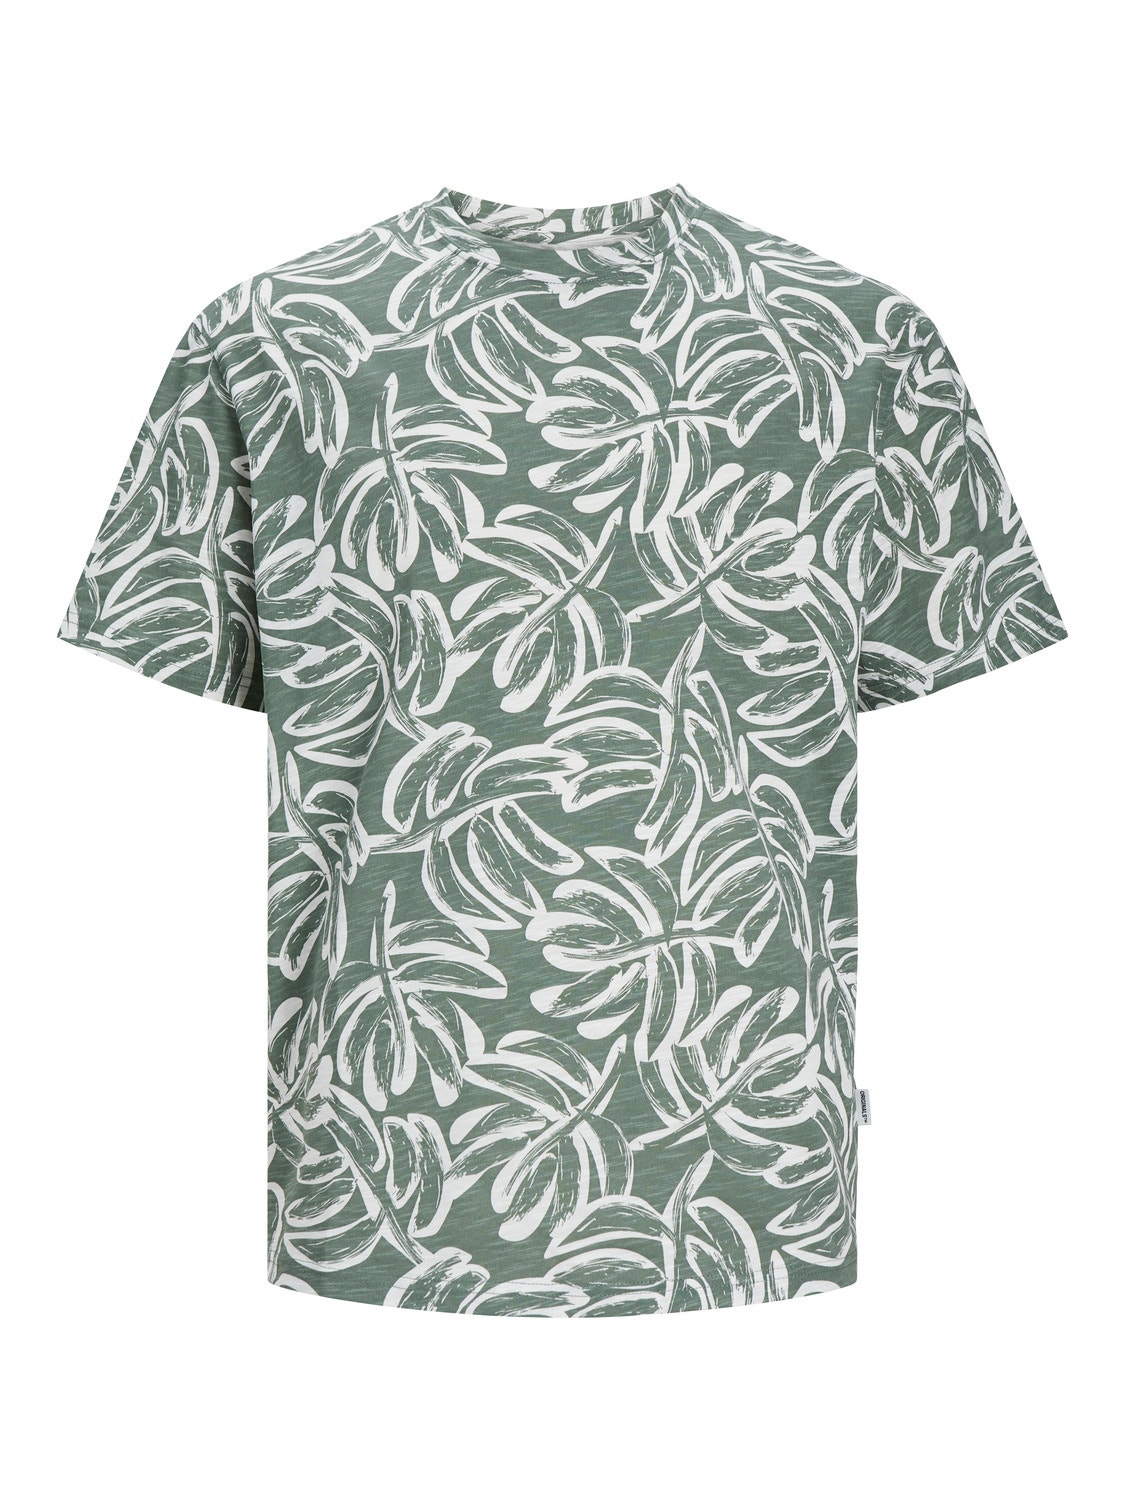 Jack & Jones All Over Print T-shirt Mini -Laurel Wreath - 12256827